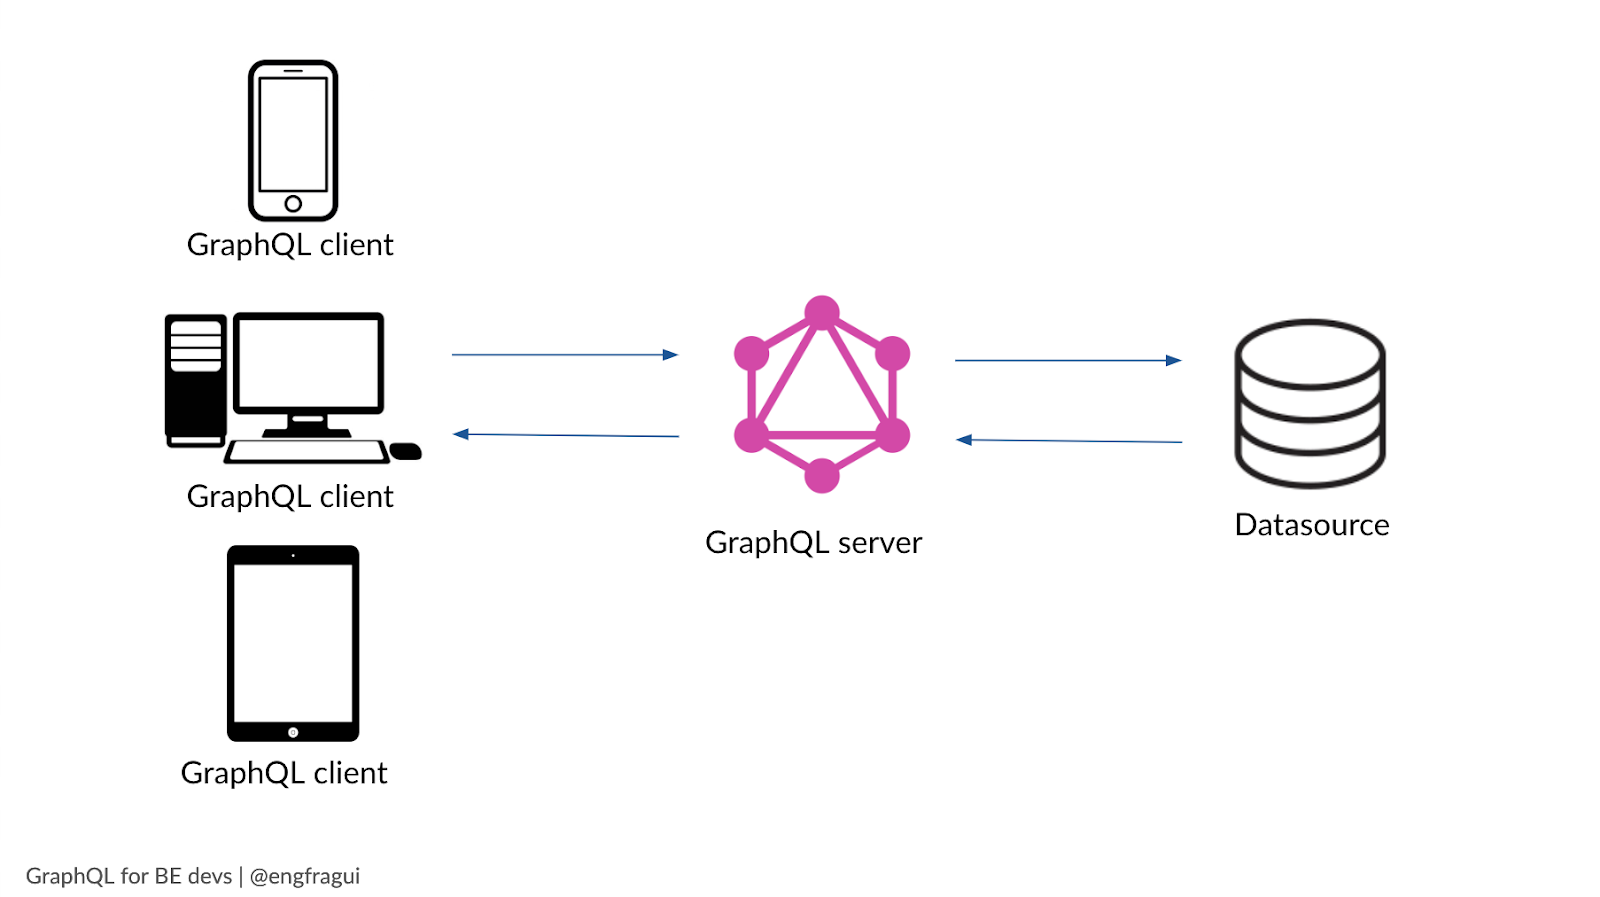 GraphQL architecture graphic - graphQL client, server, and datasouce connection